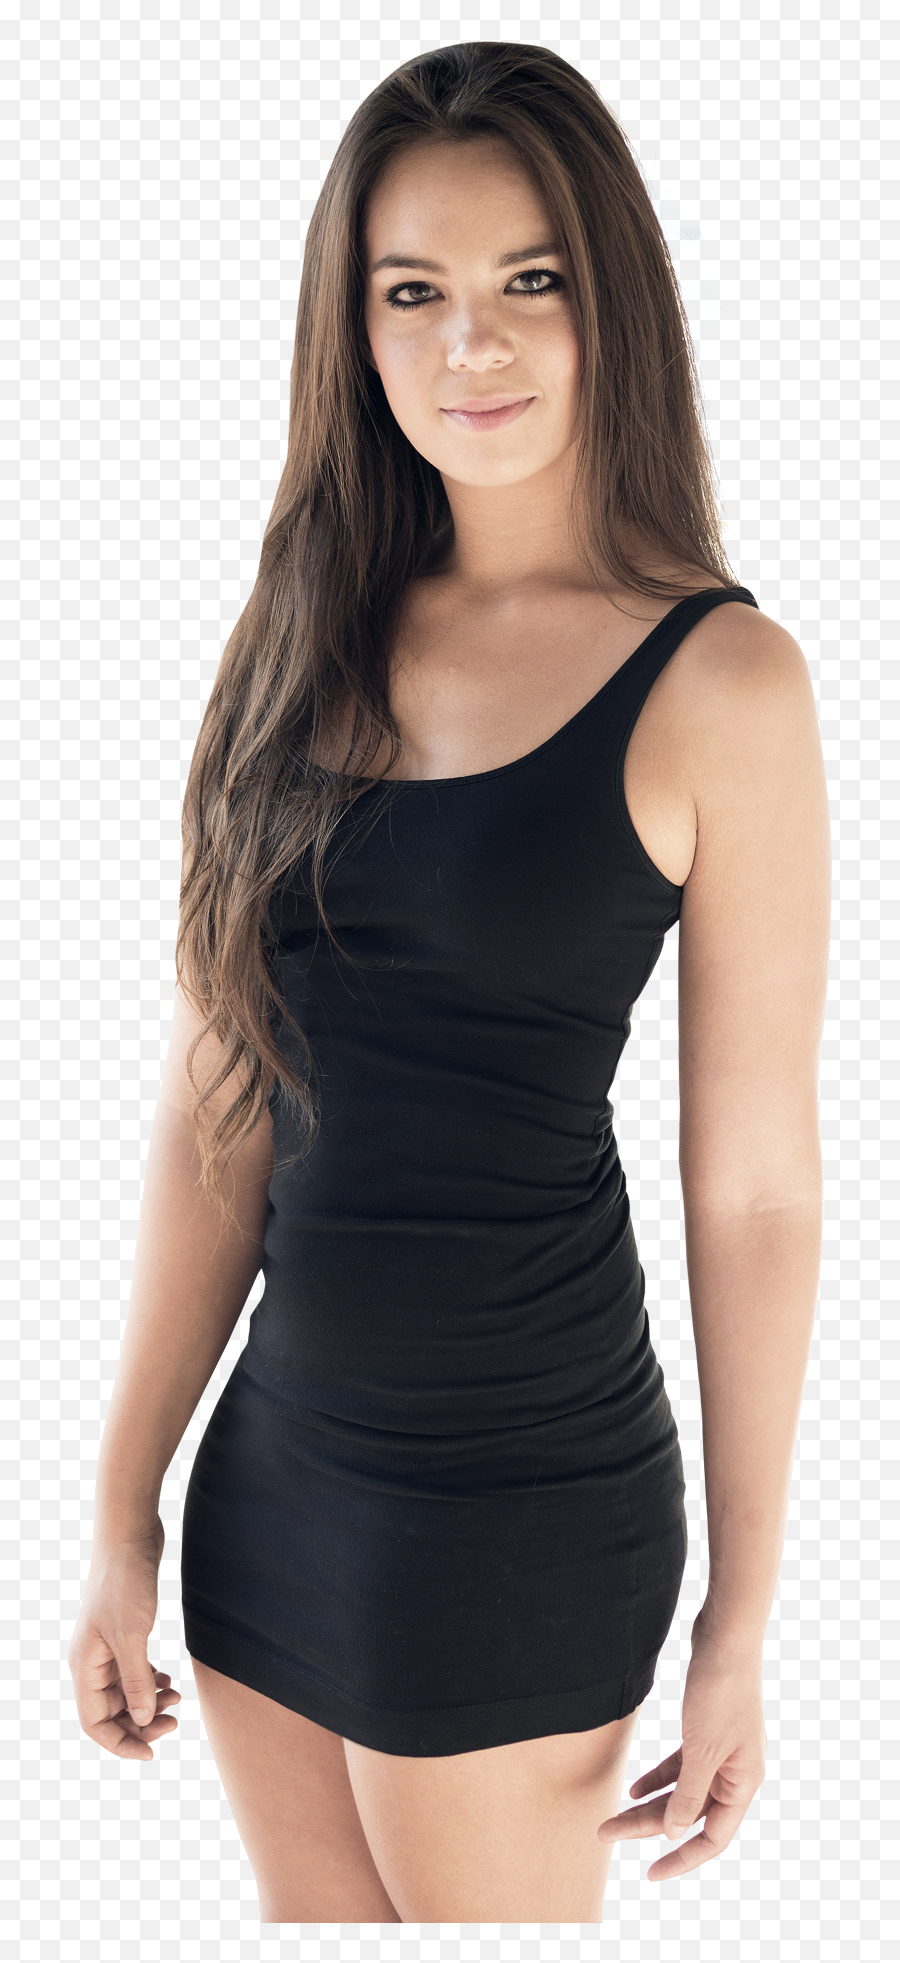 Black Dress Png Images - Pngpix Young Woman Png,Black Dress Png